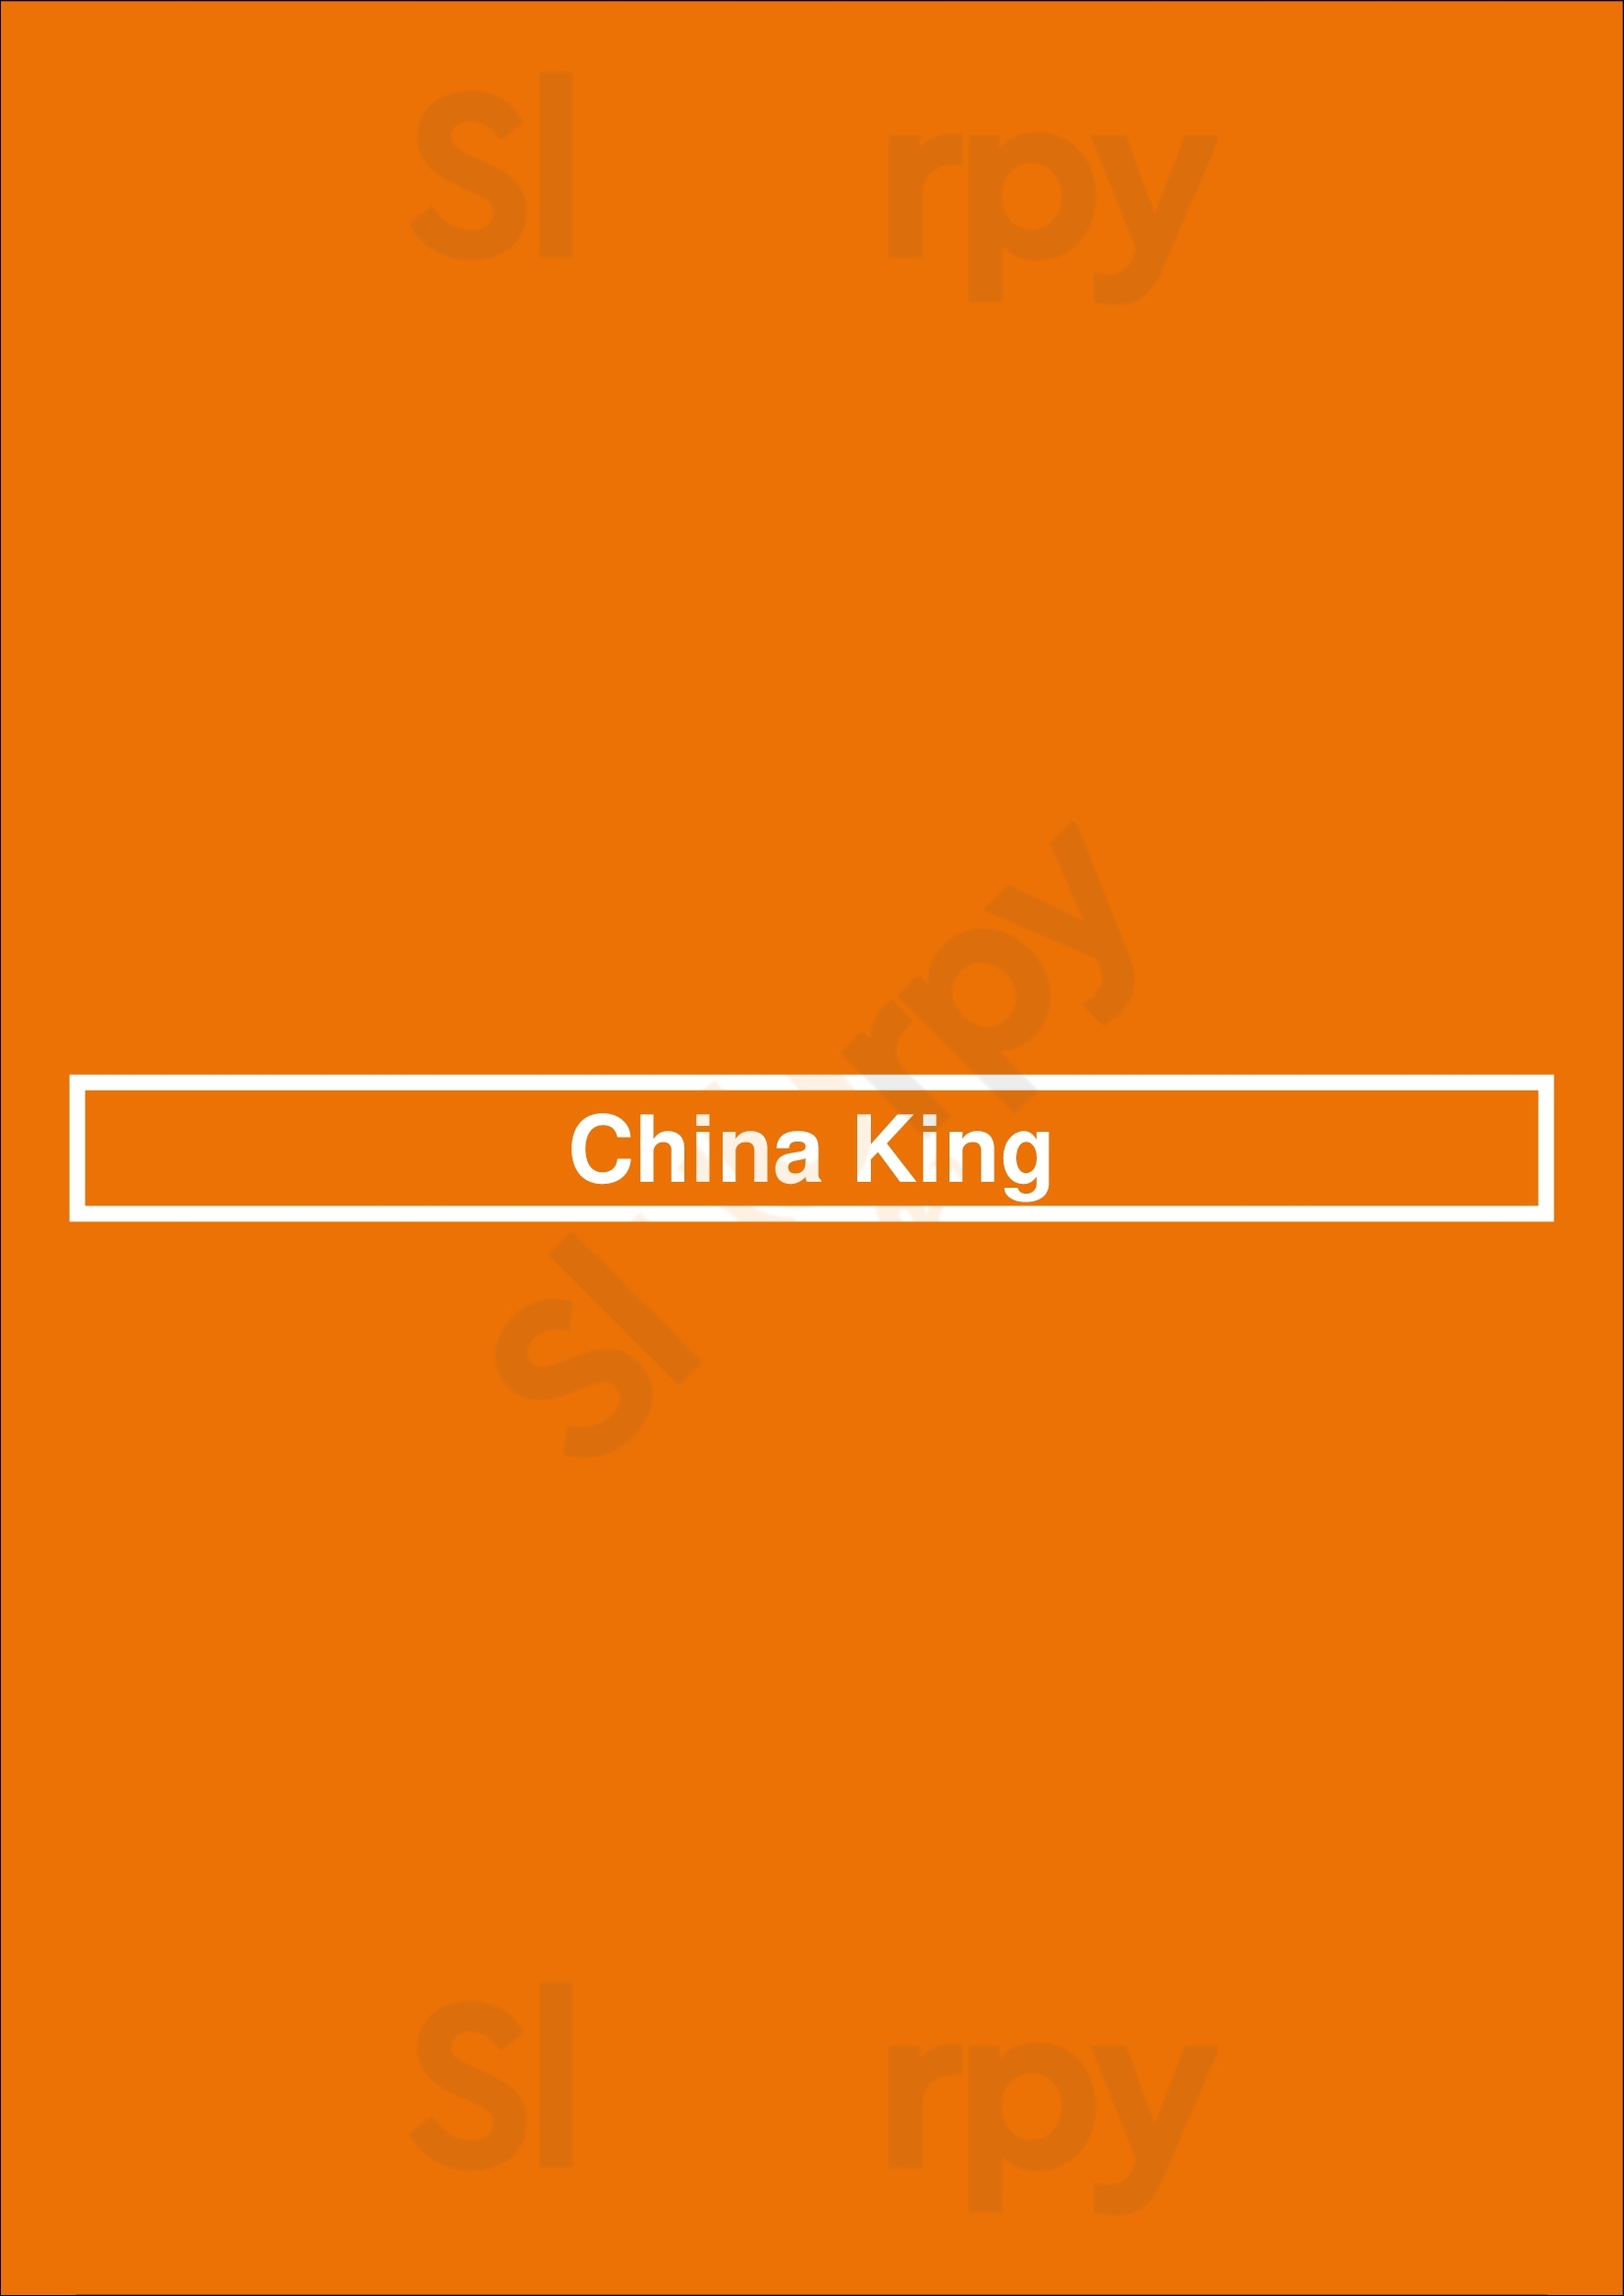 China King Tulsa Menu - 1